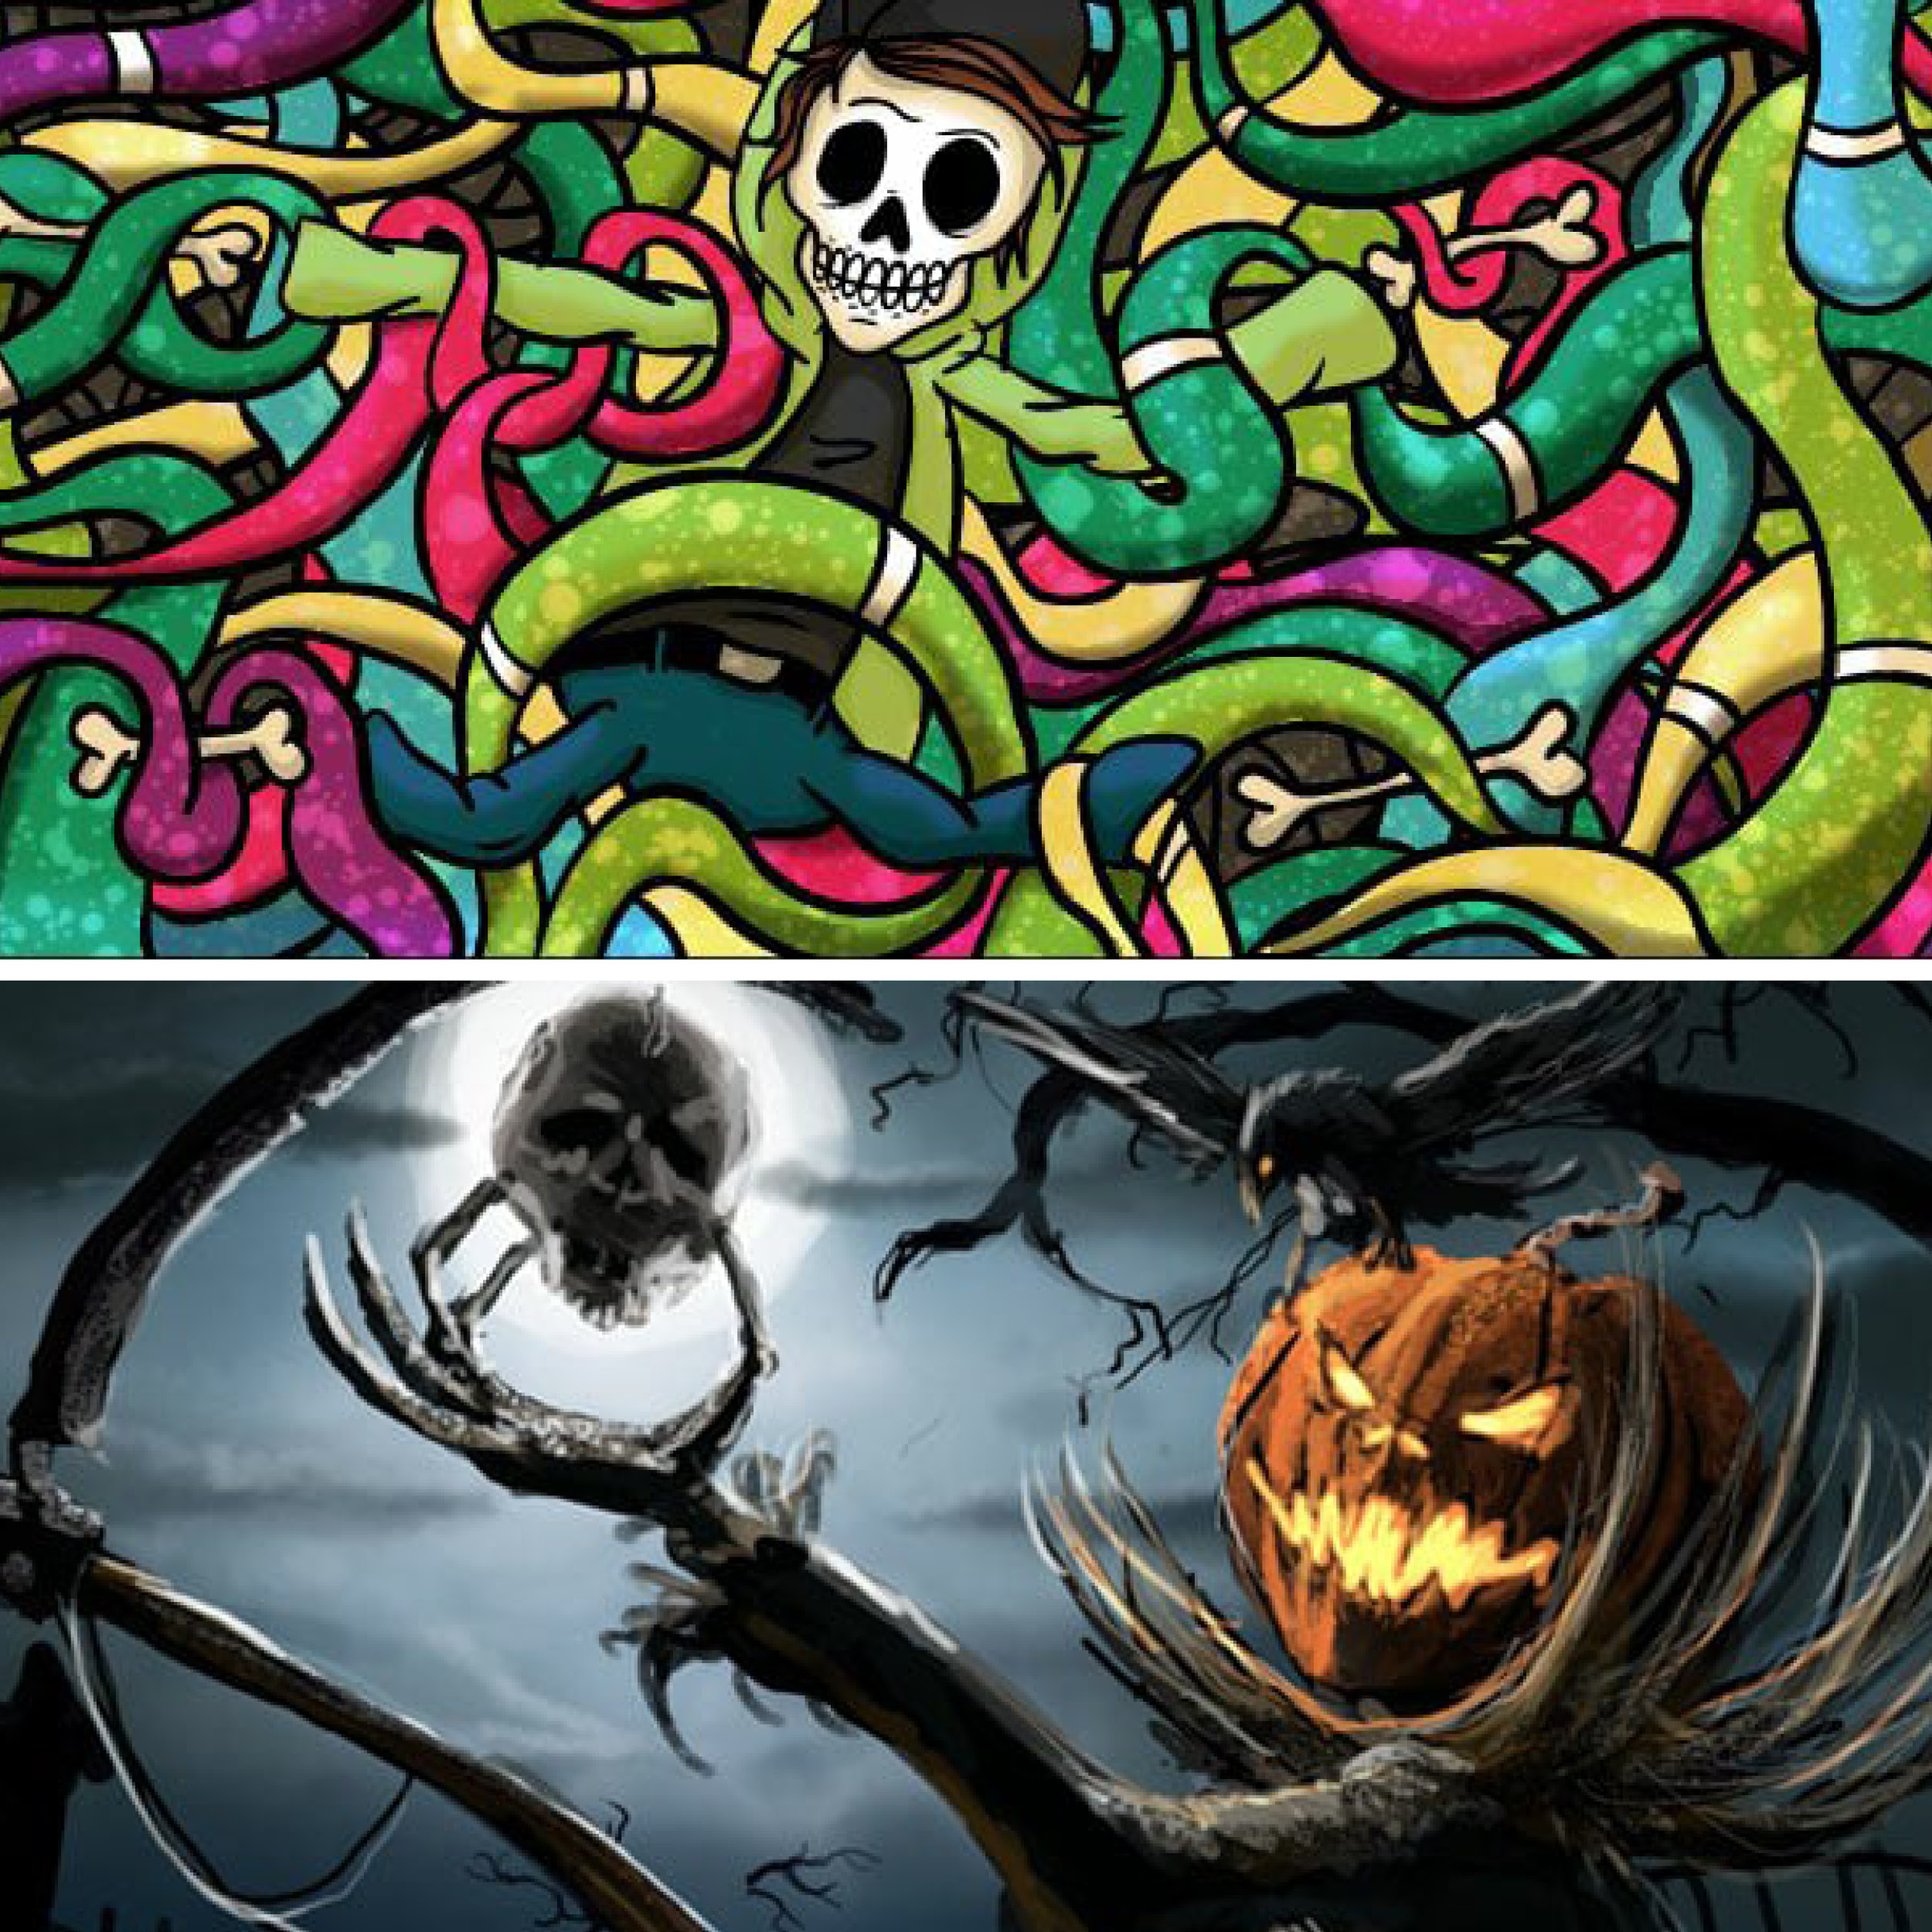 Illustrated graphics, skull themed